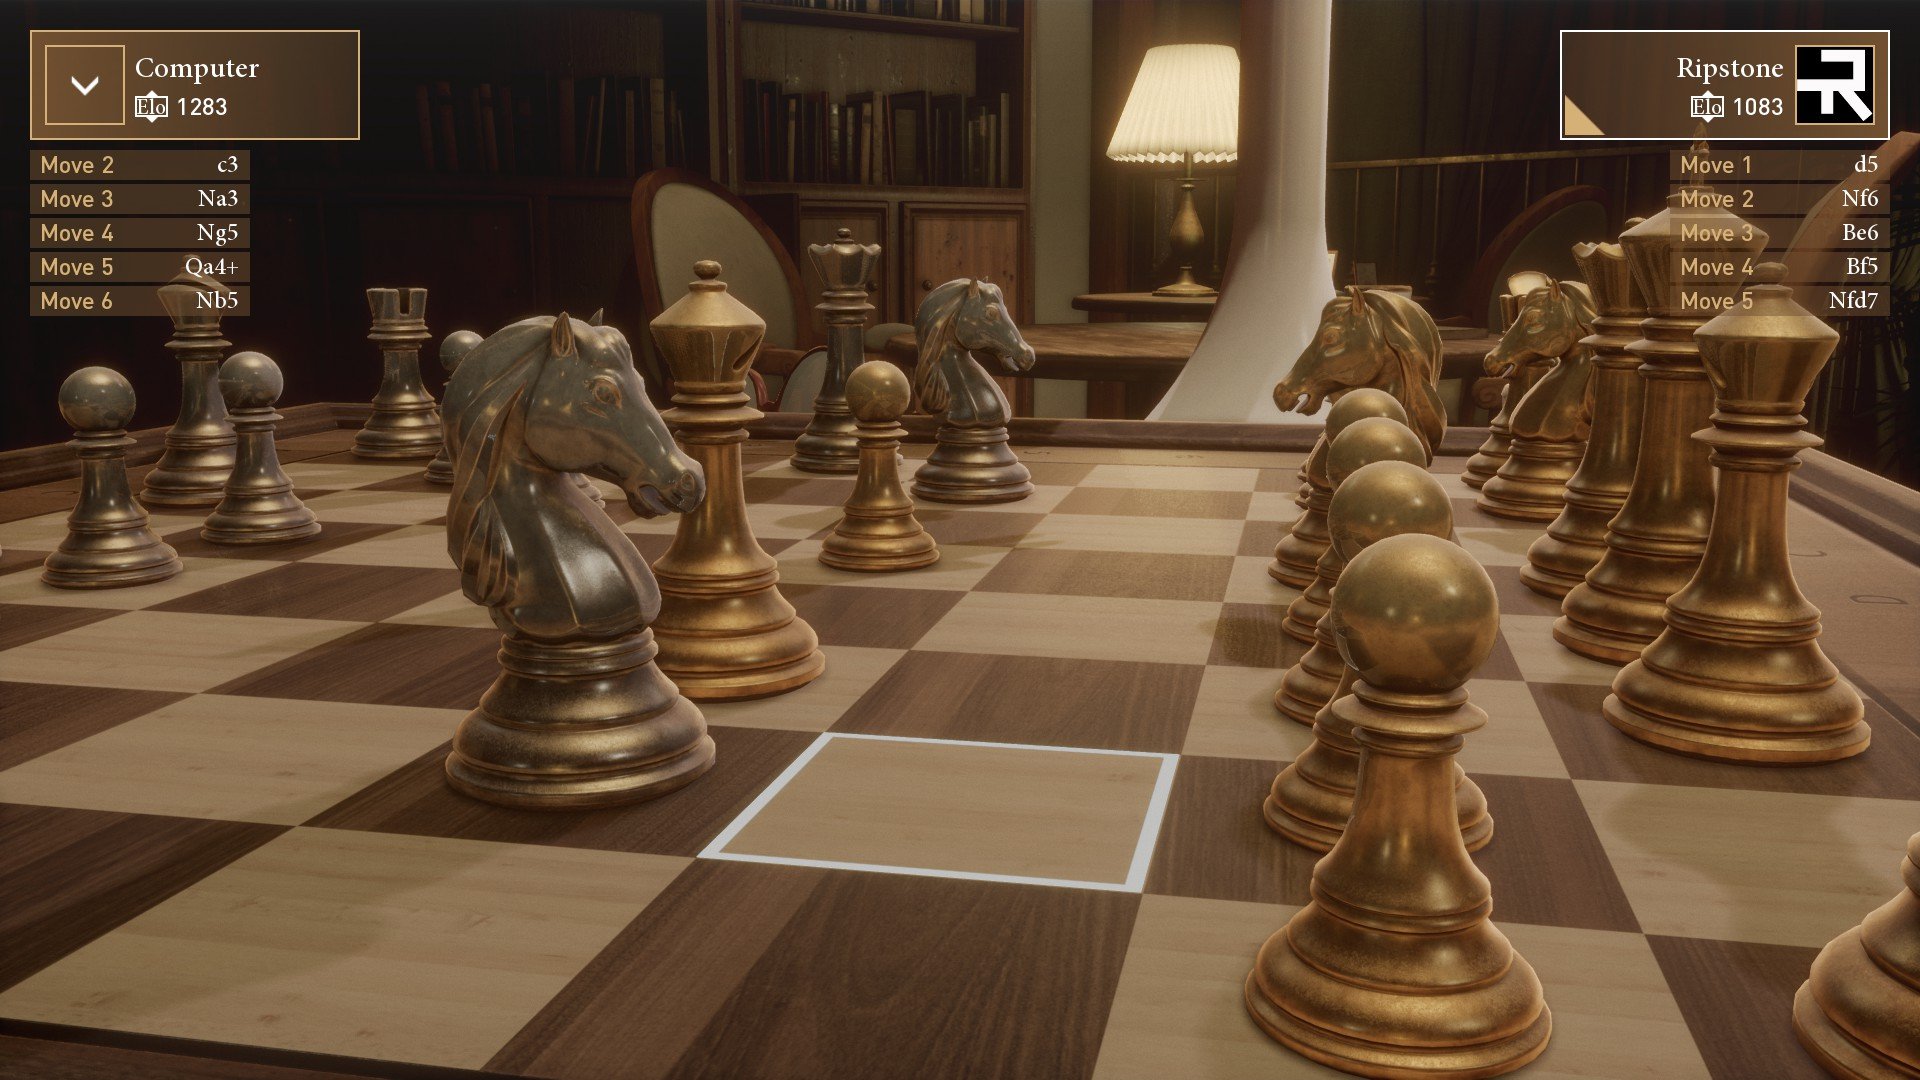 Chess Ultra, Announce Trailer